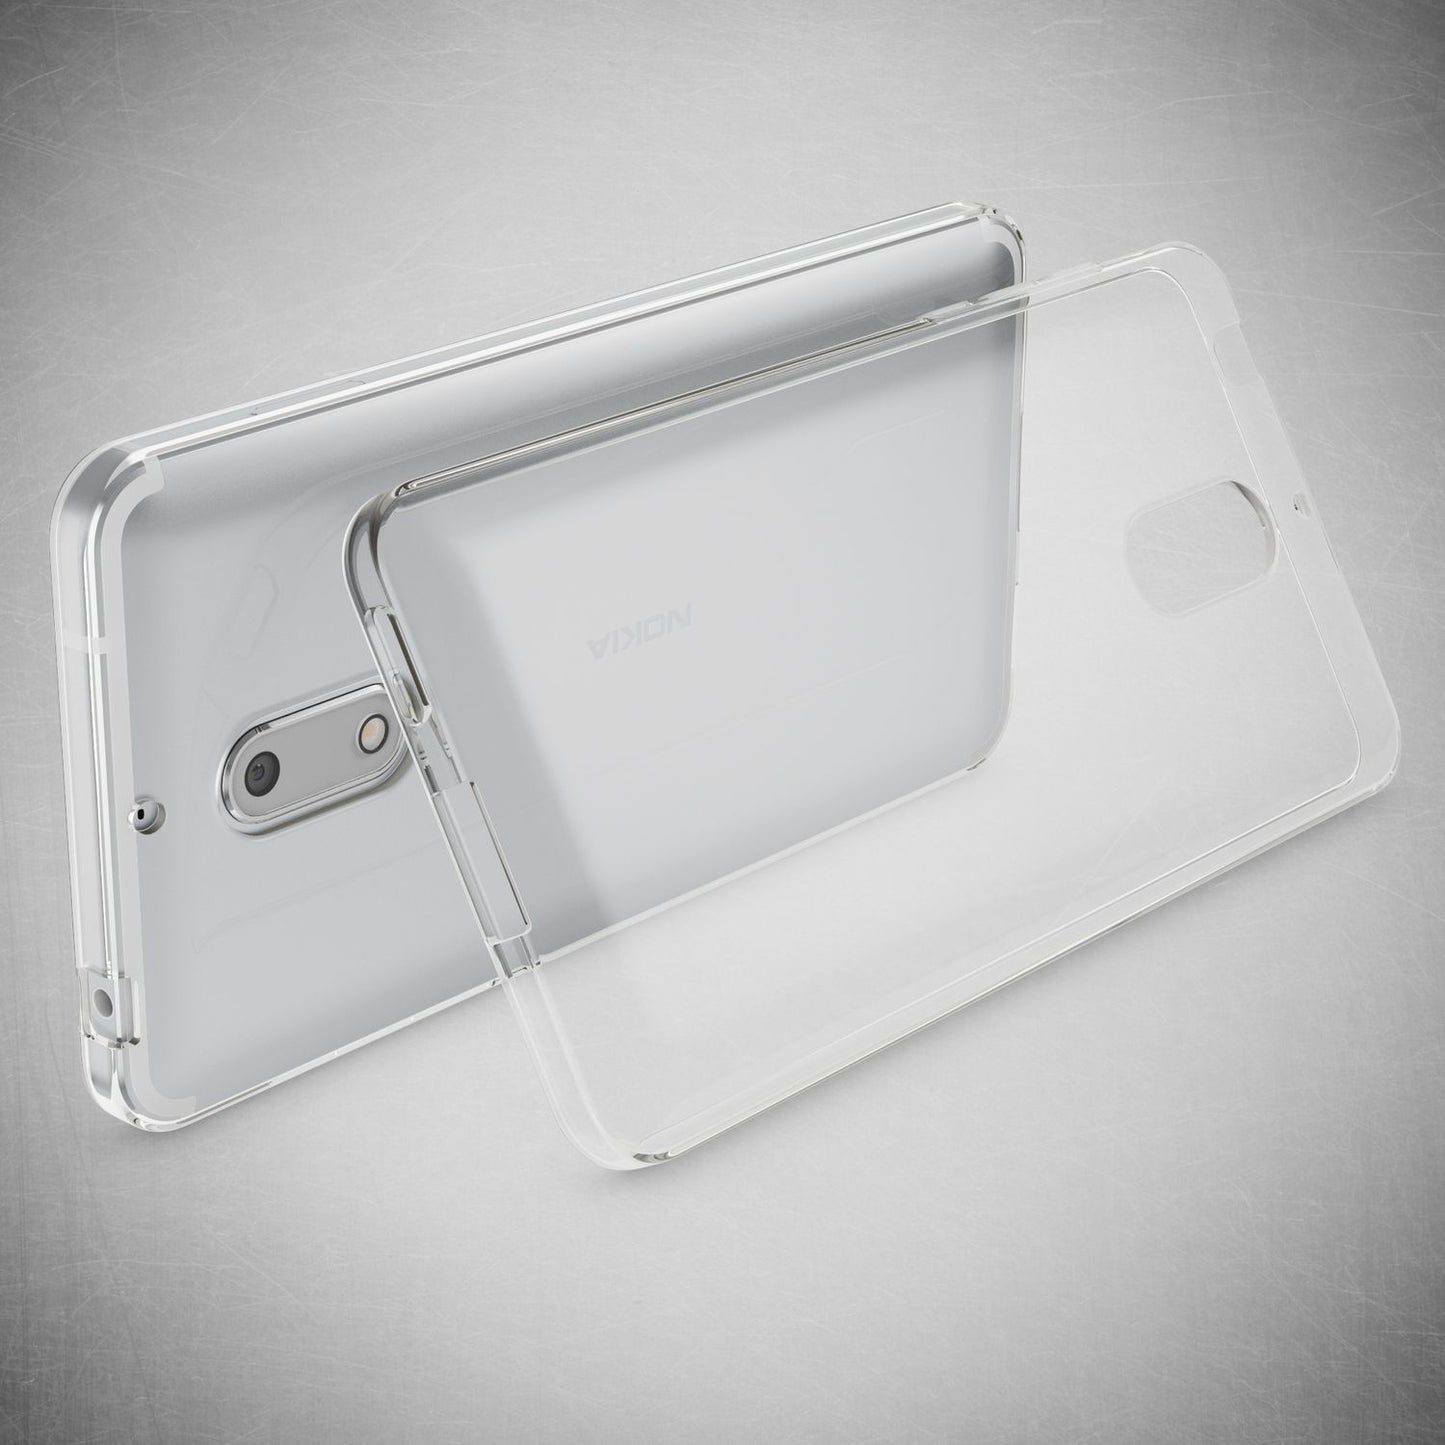 Nokia 6 Handy Hülle von NALIA, Transparente Silikon Case Cover Tasche Schutzhülle